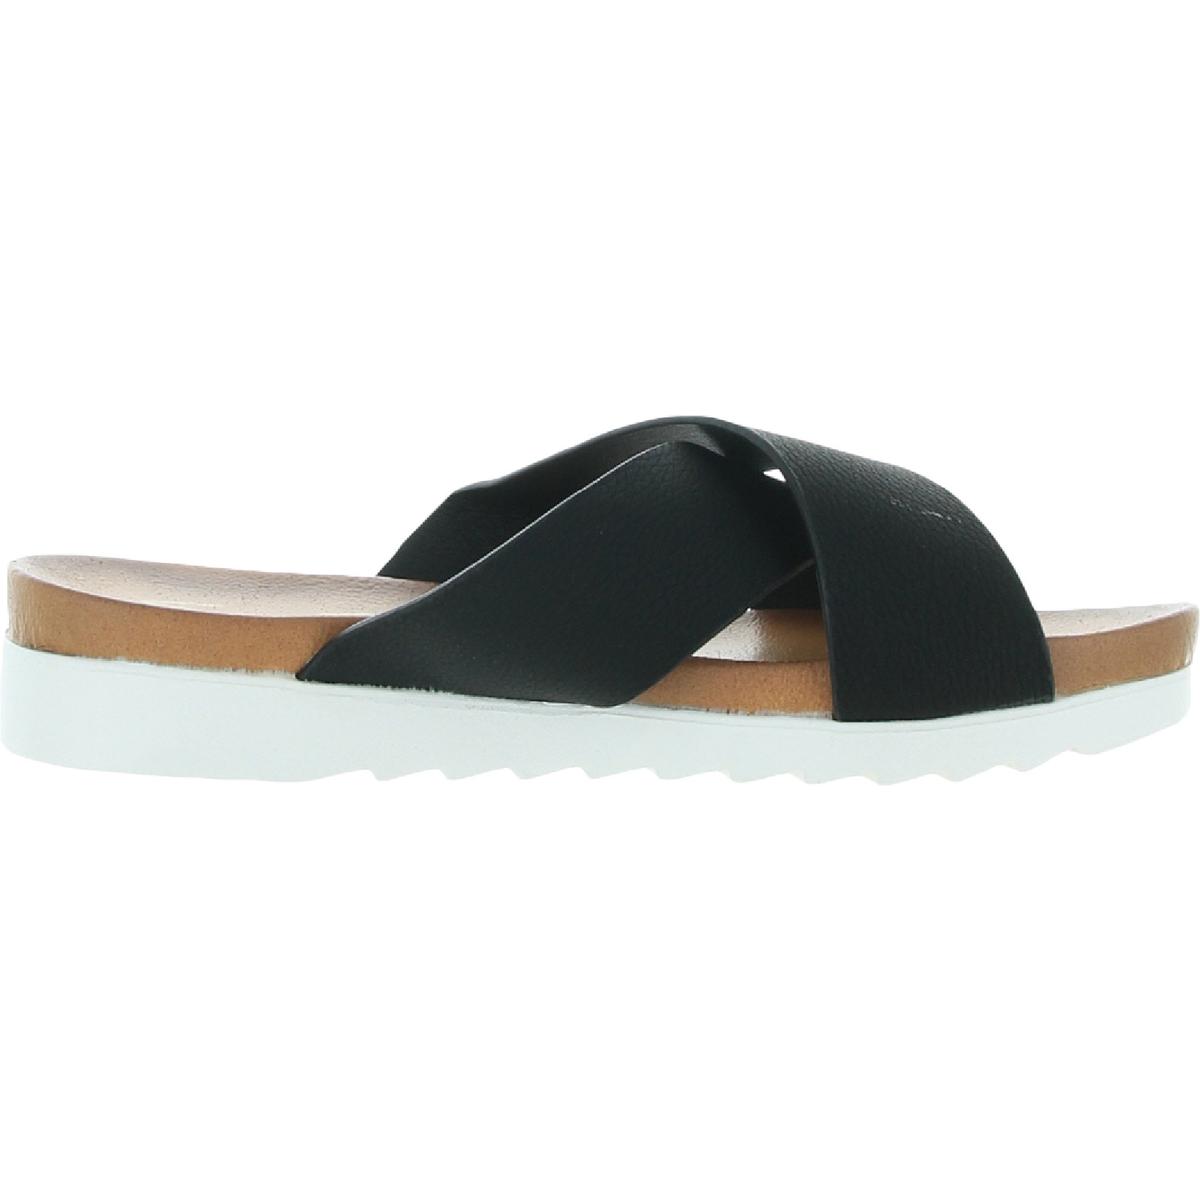 Seven7 Jade Womens Faux Leather Flat Slide Sandals